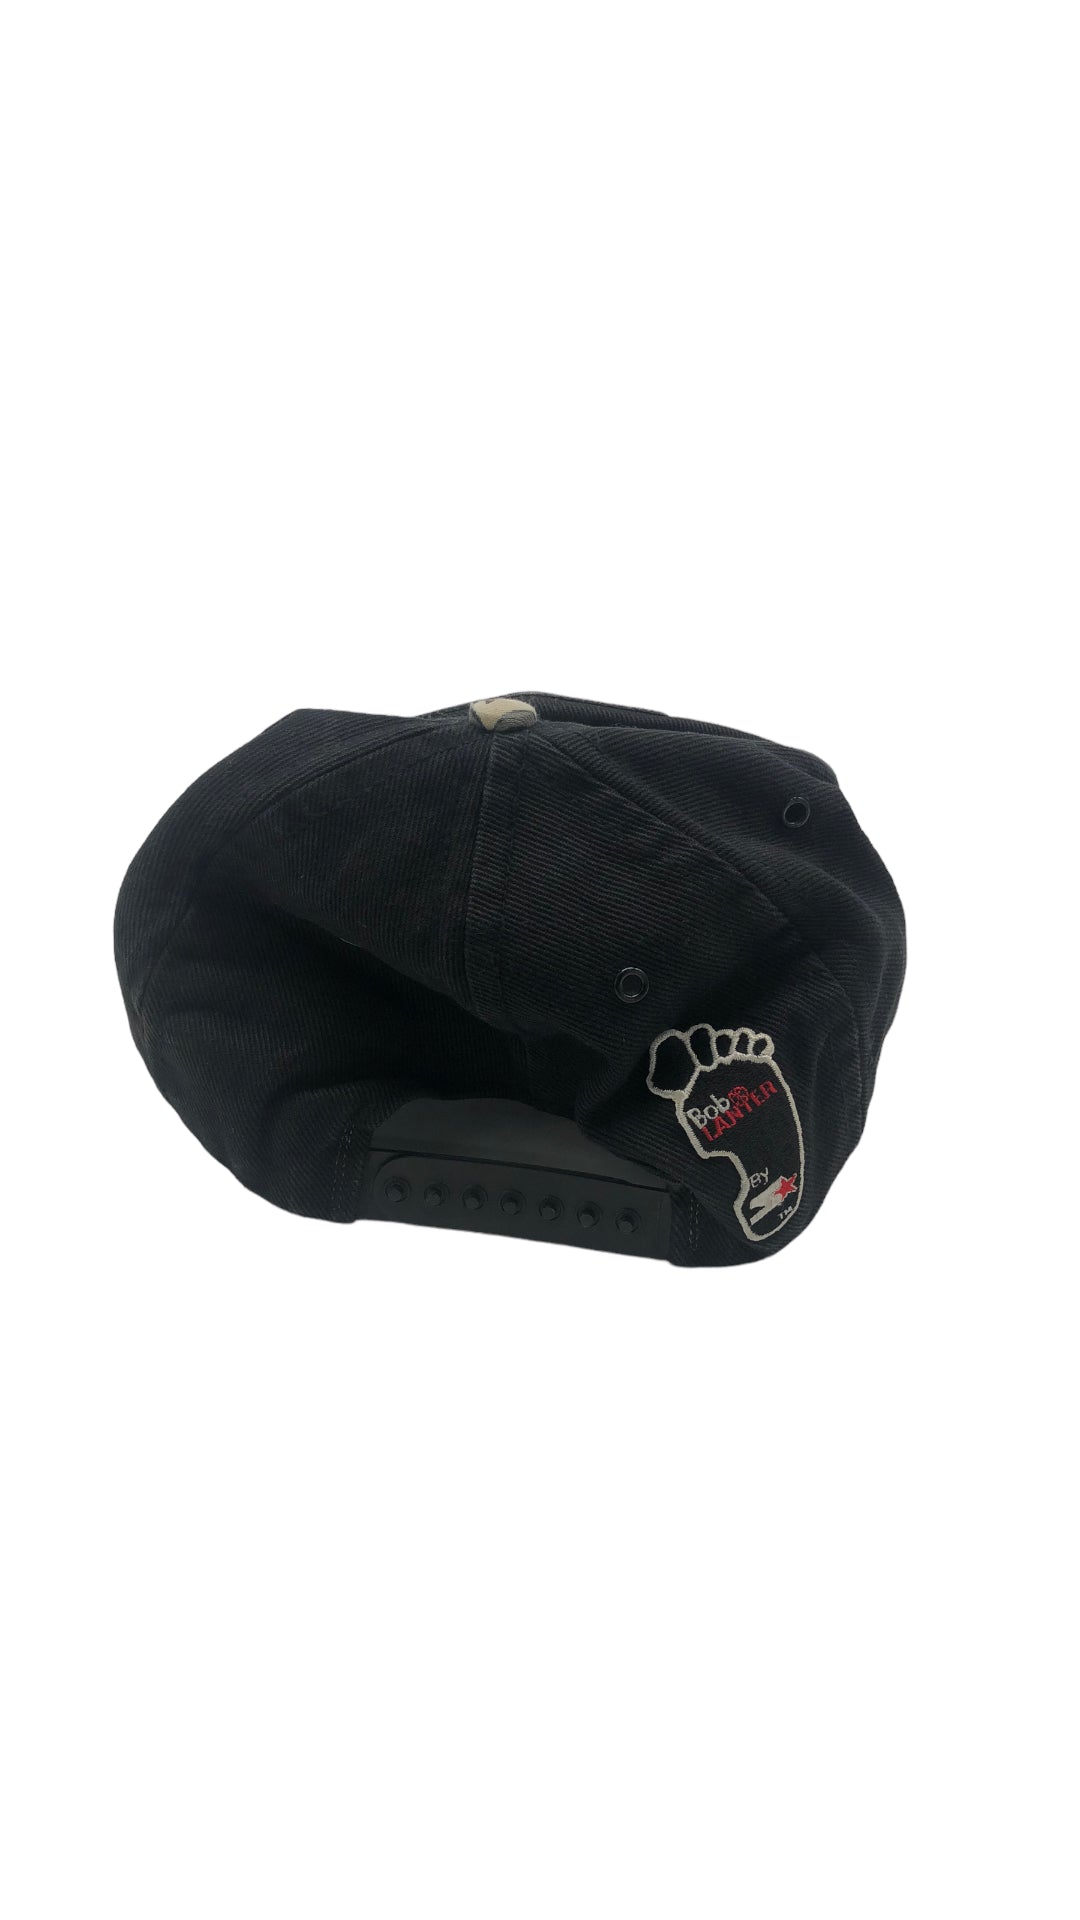 VTG 91 NBA World Champions Chicago Bulls Snap Back Hat